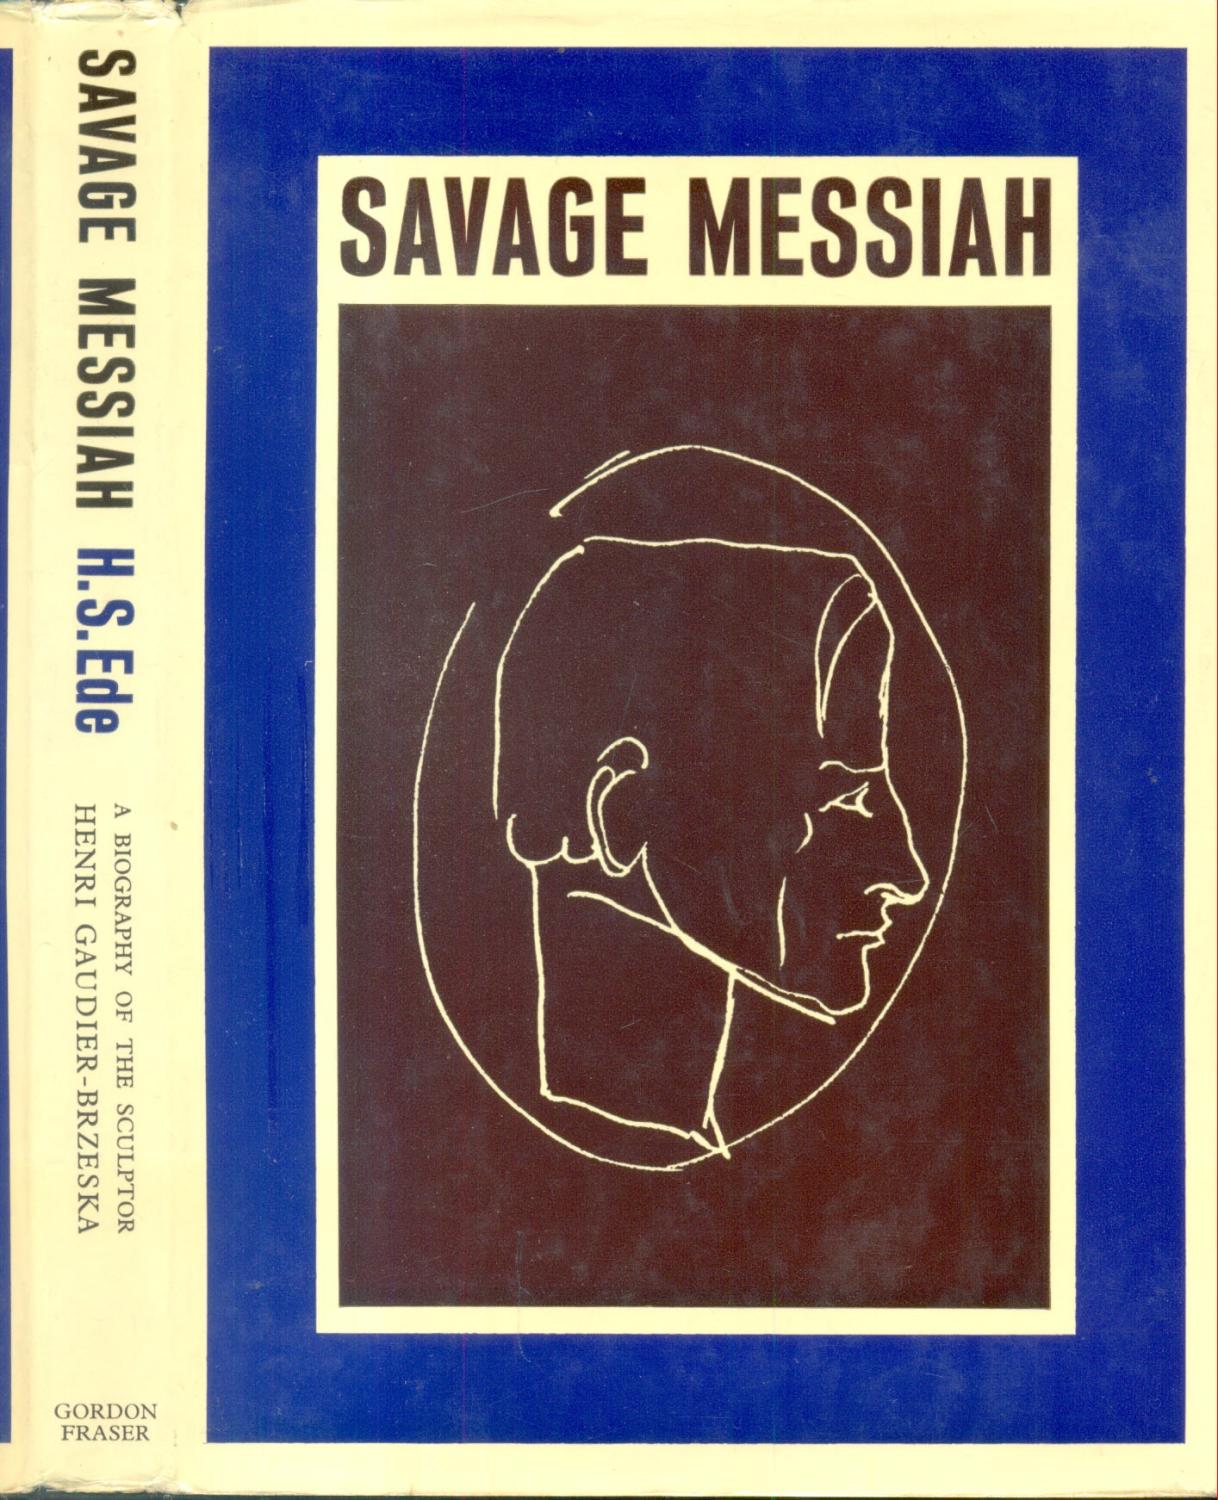 Savage Messiah: Biography of the Sculptor Henri Gaudier-Brzeska